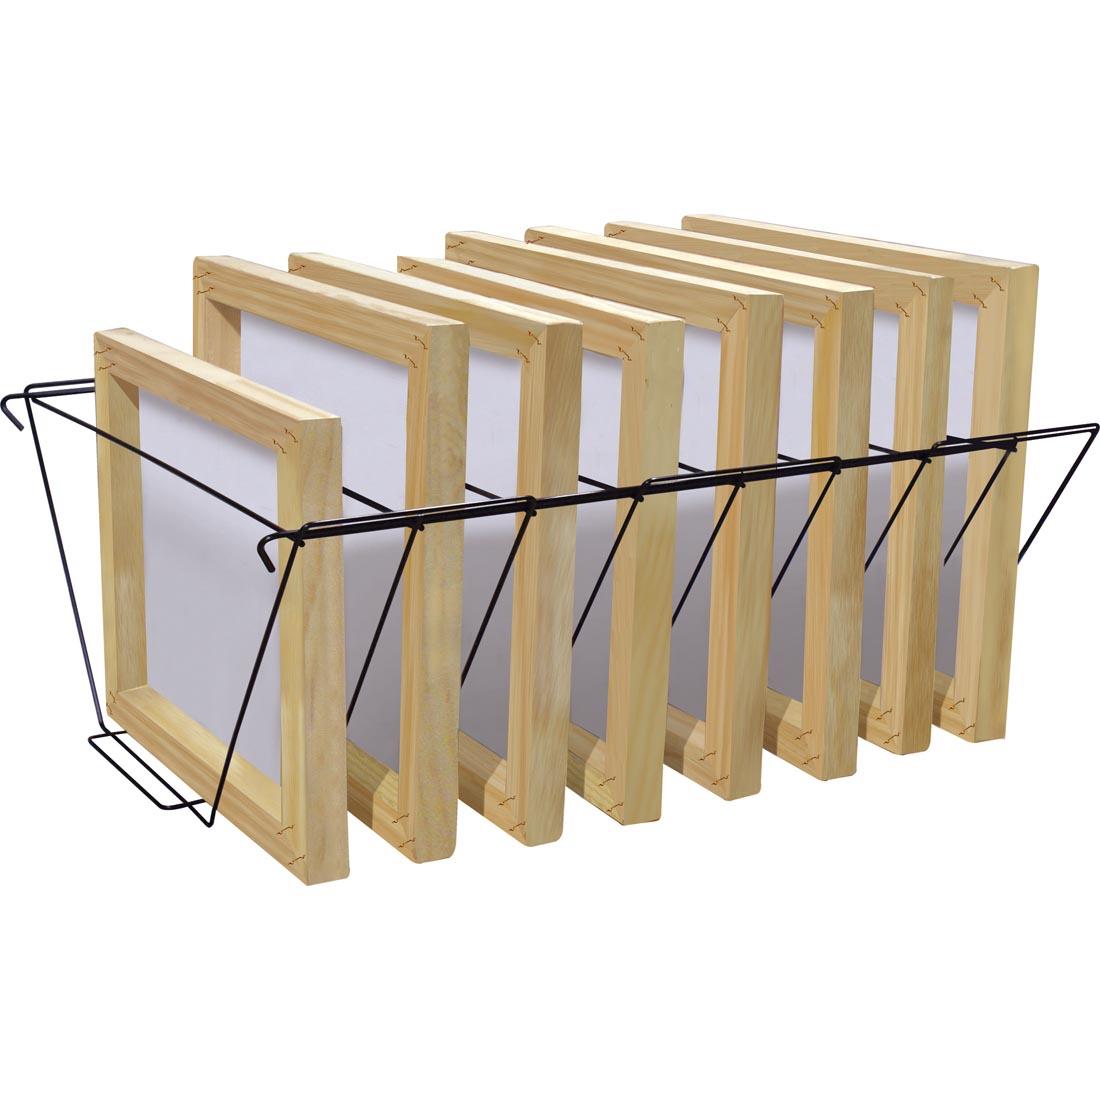 8-Shelf Drying & Storage Rack shown storing screen print frames